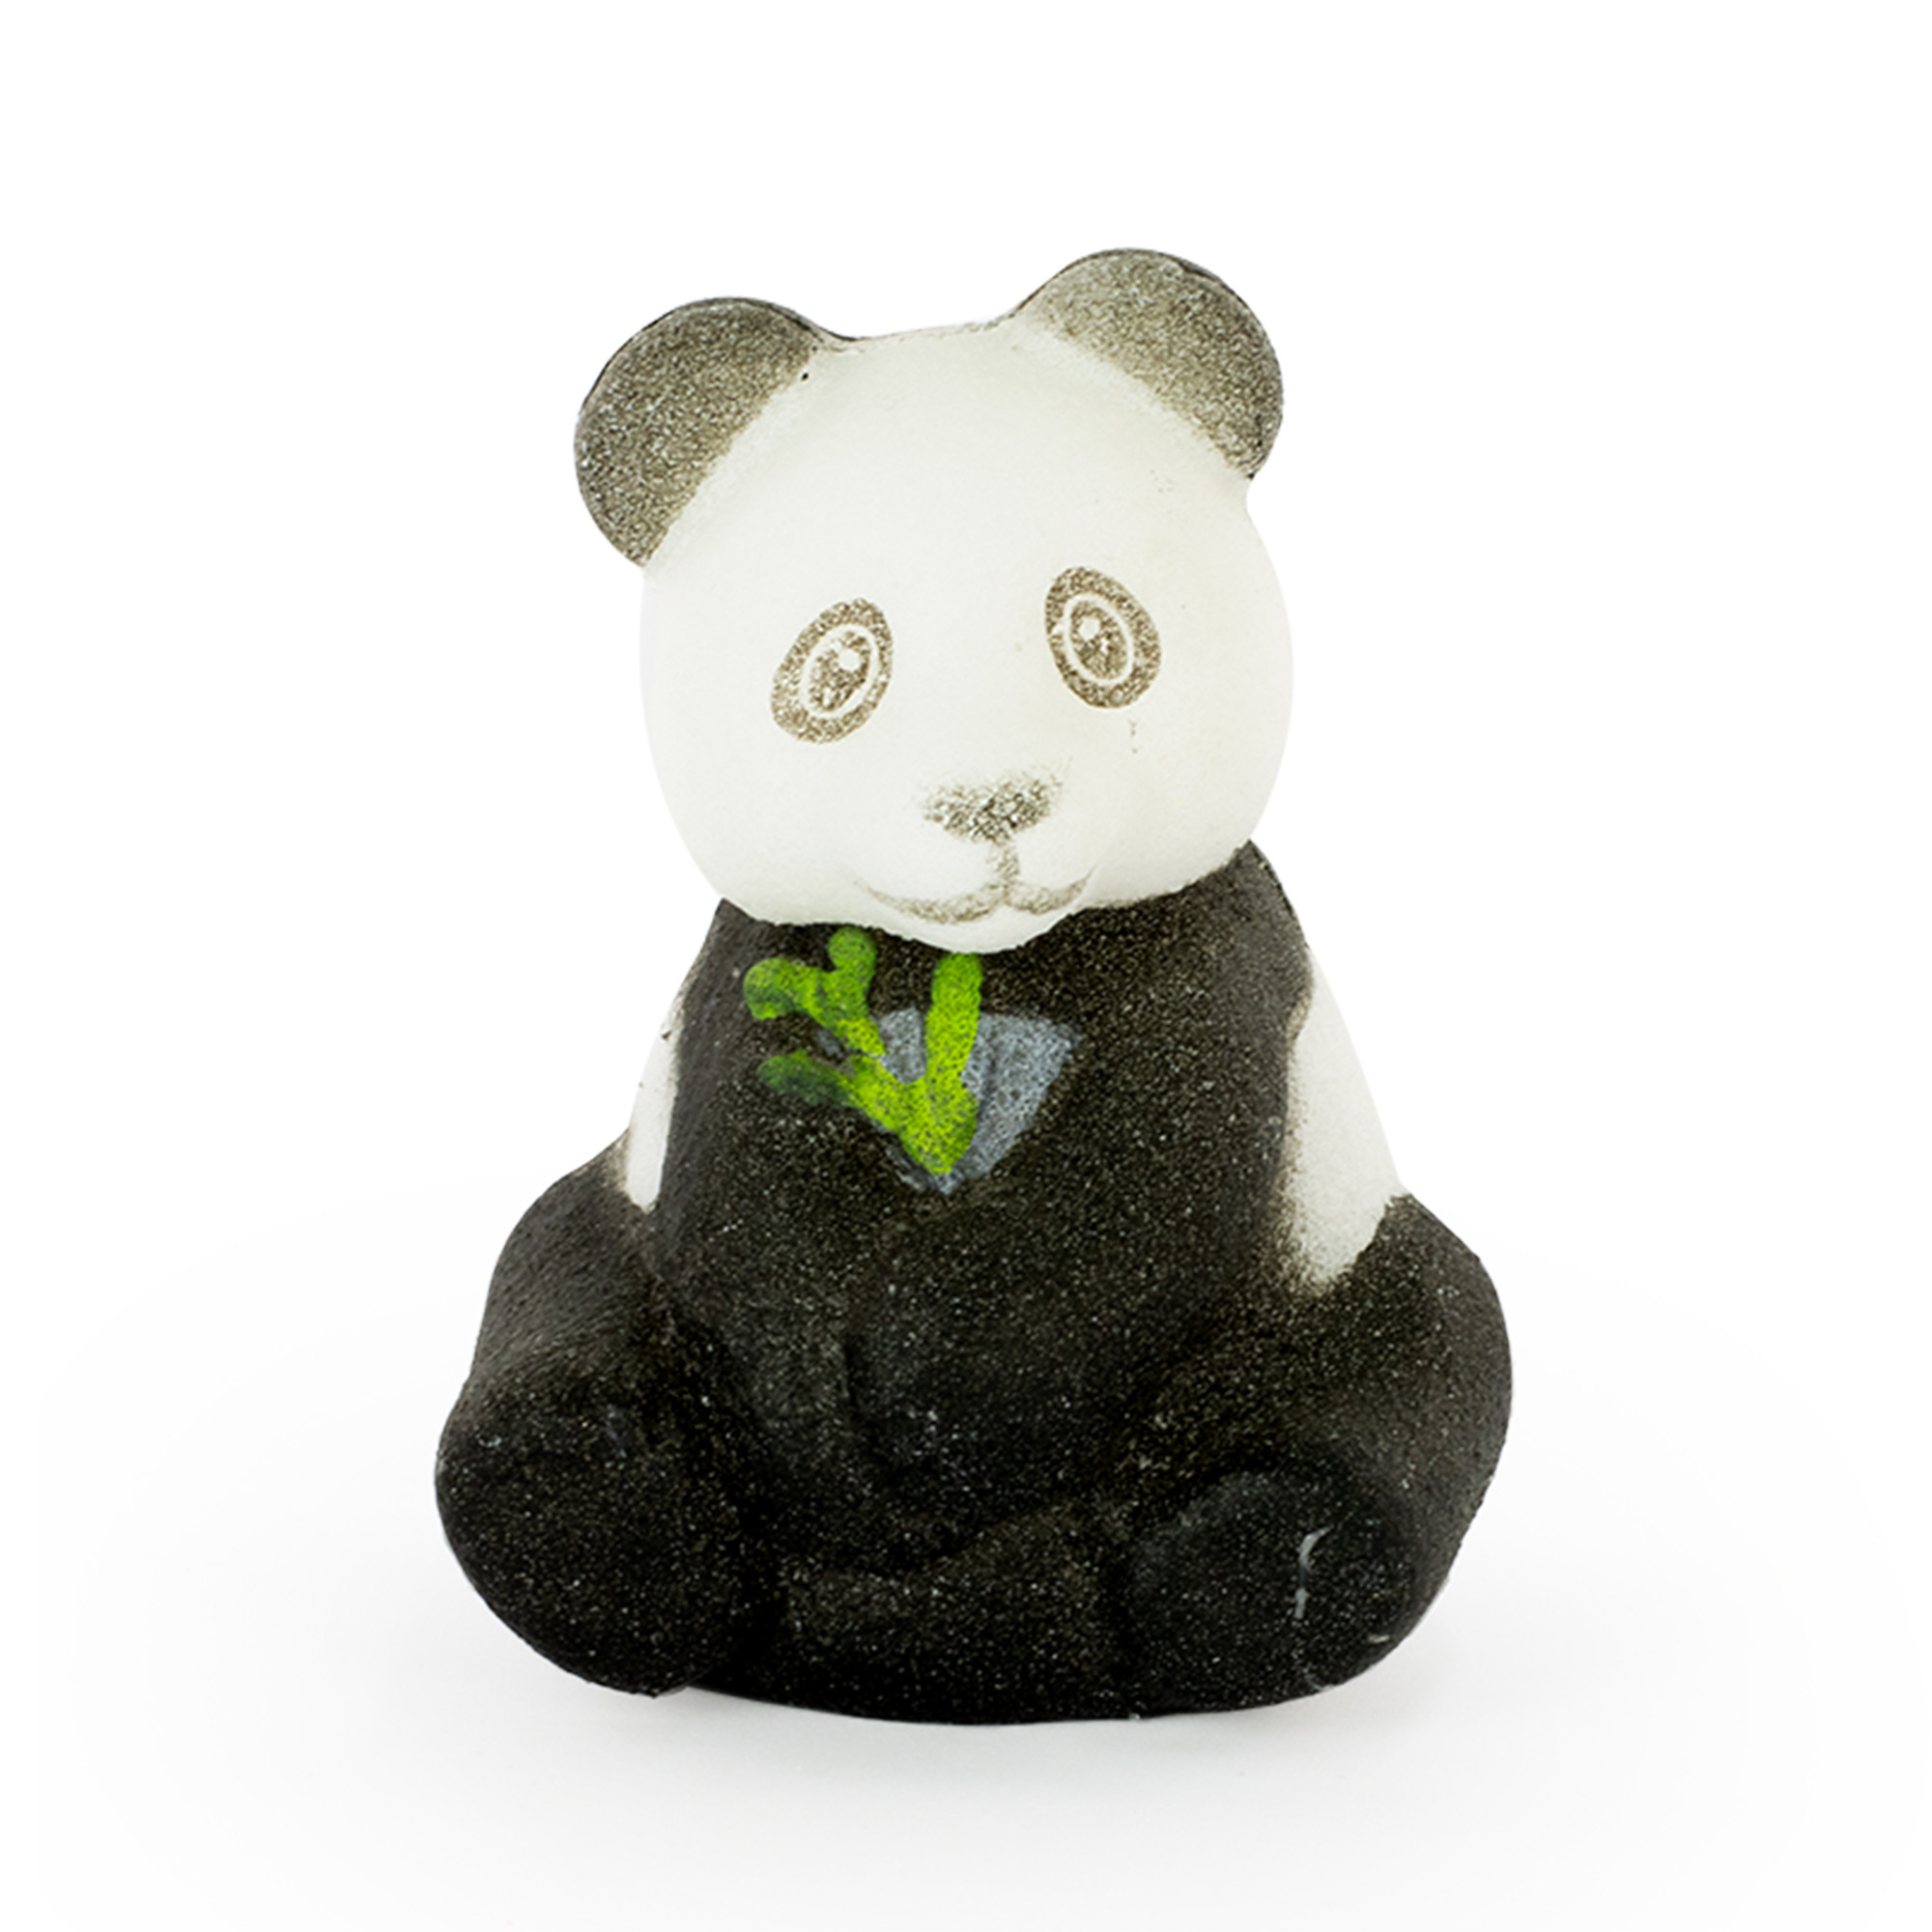 ROOST Grow Panda NV644